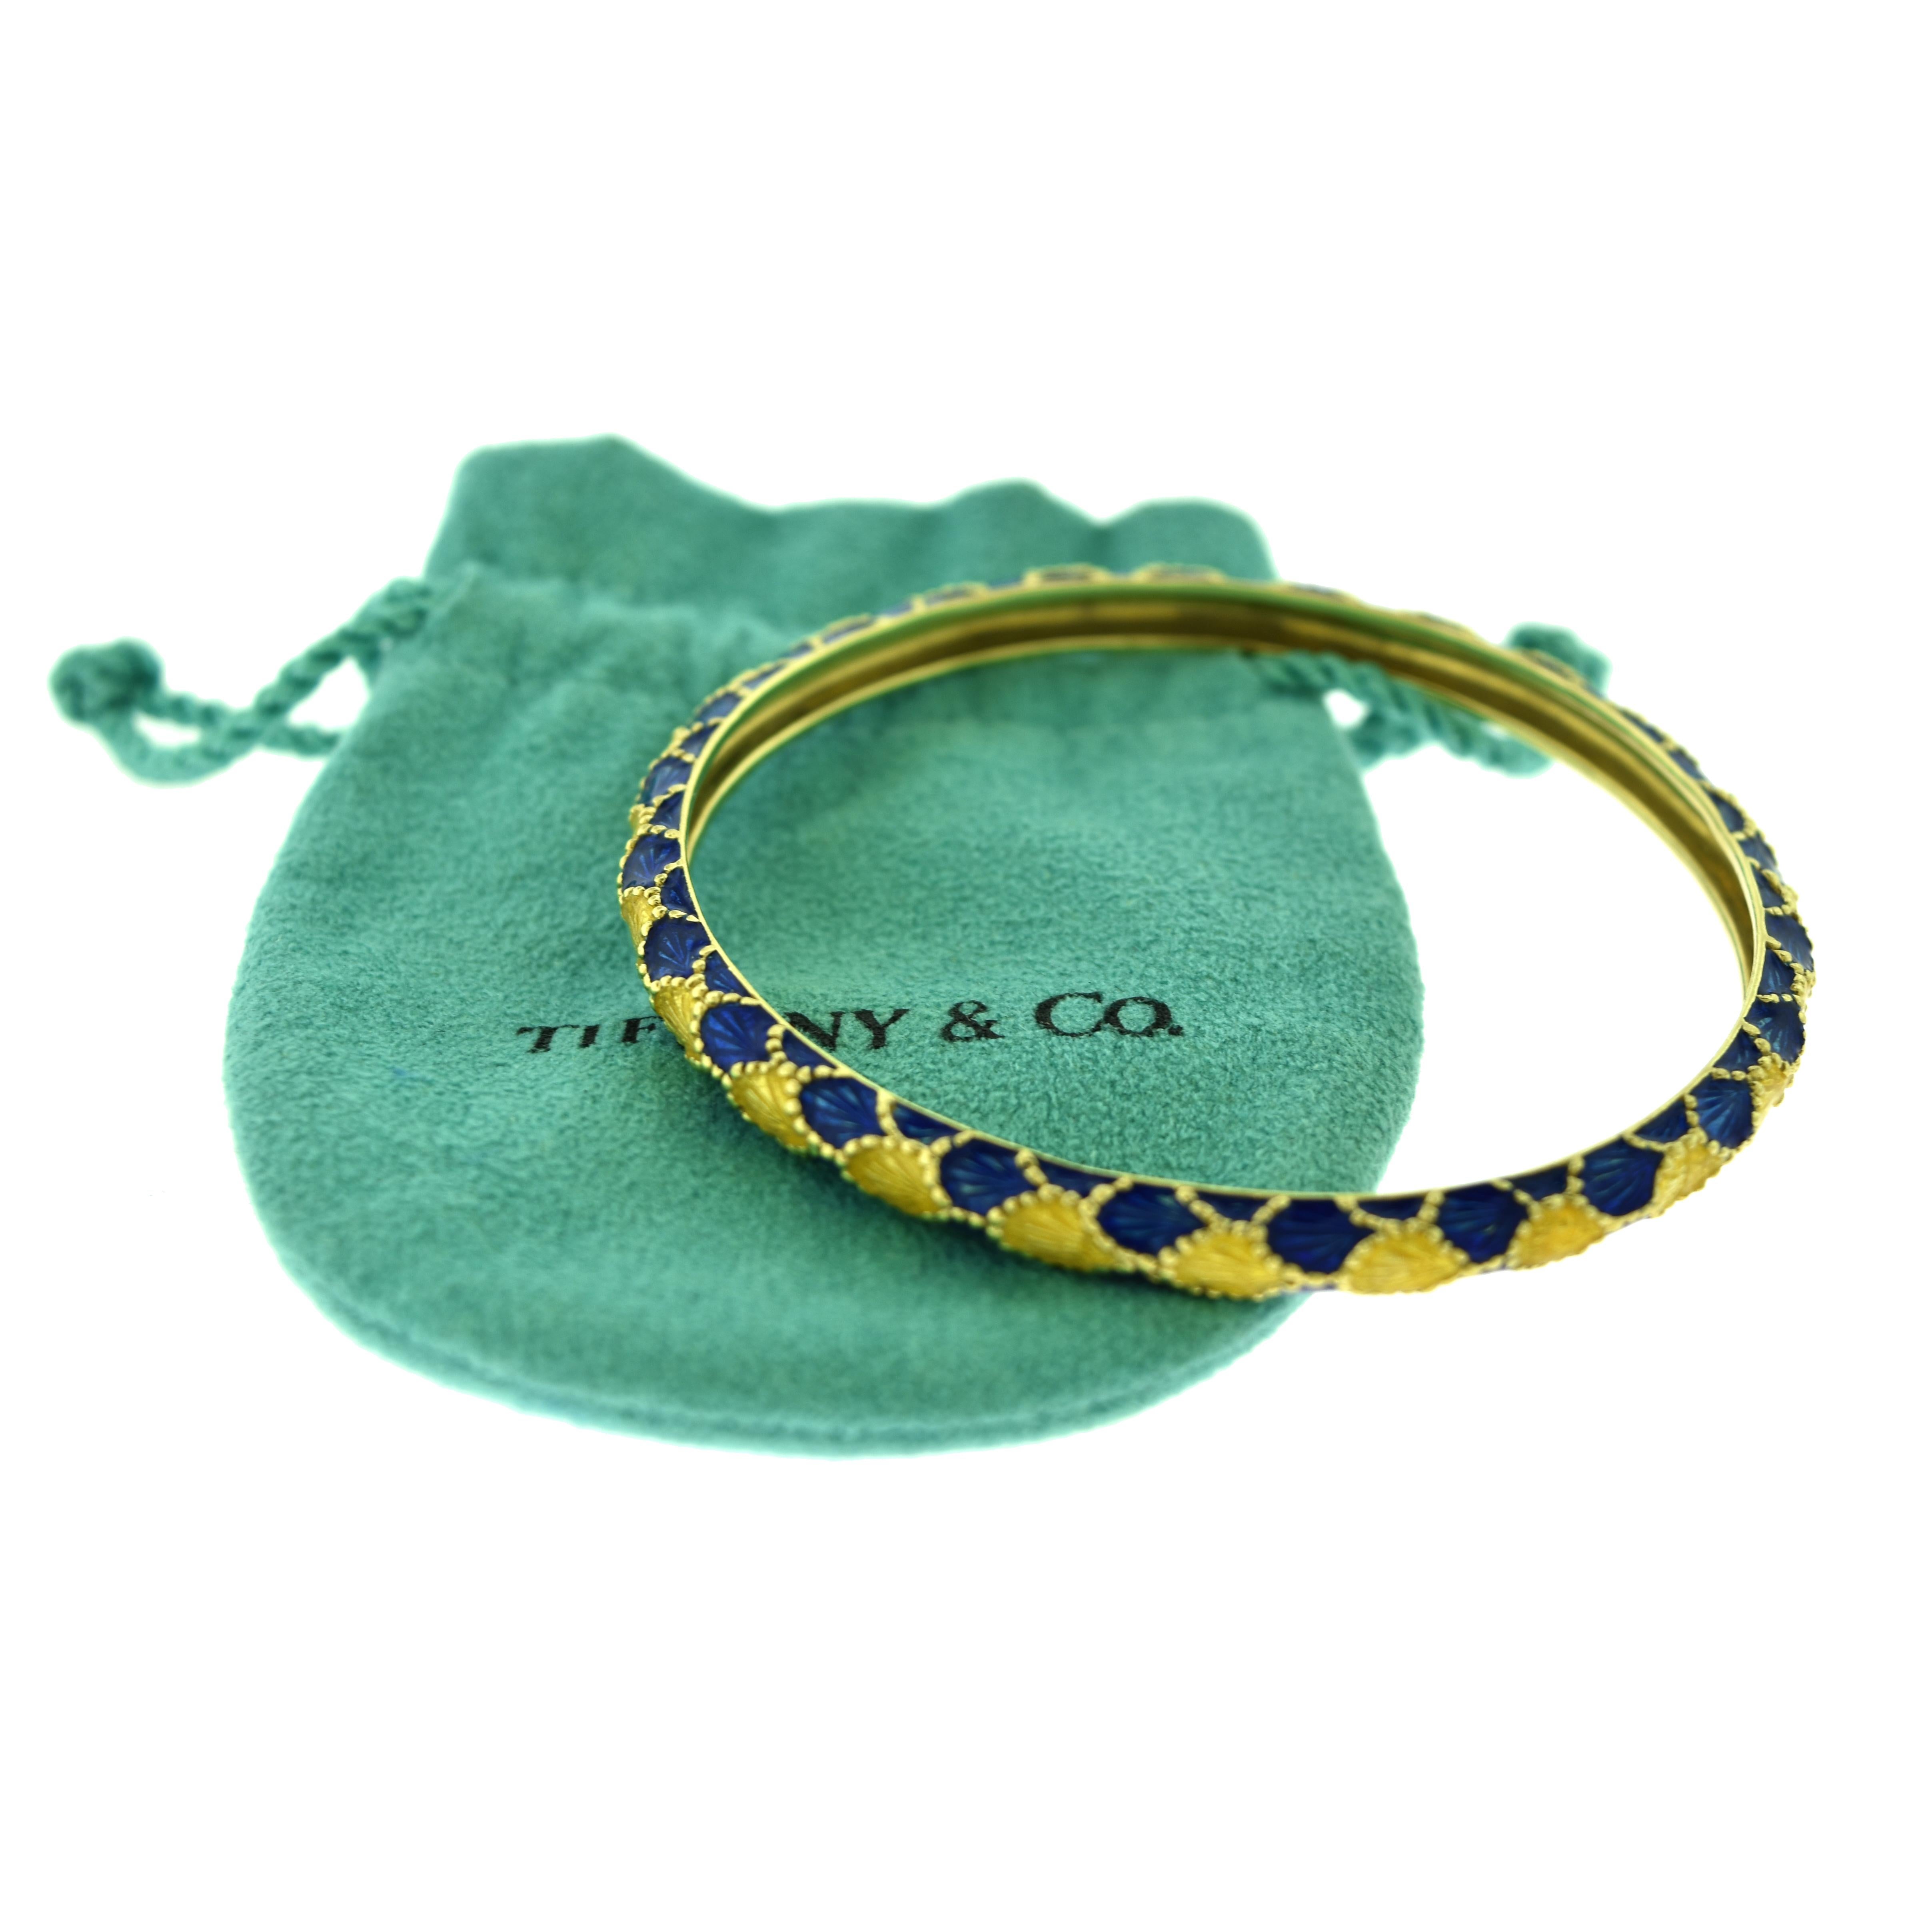 Women's or Men's Vintage Tiffany & Co. Yellow Gold and Blue Enamel Design Bangle Bracelet